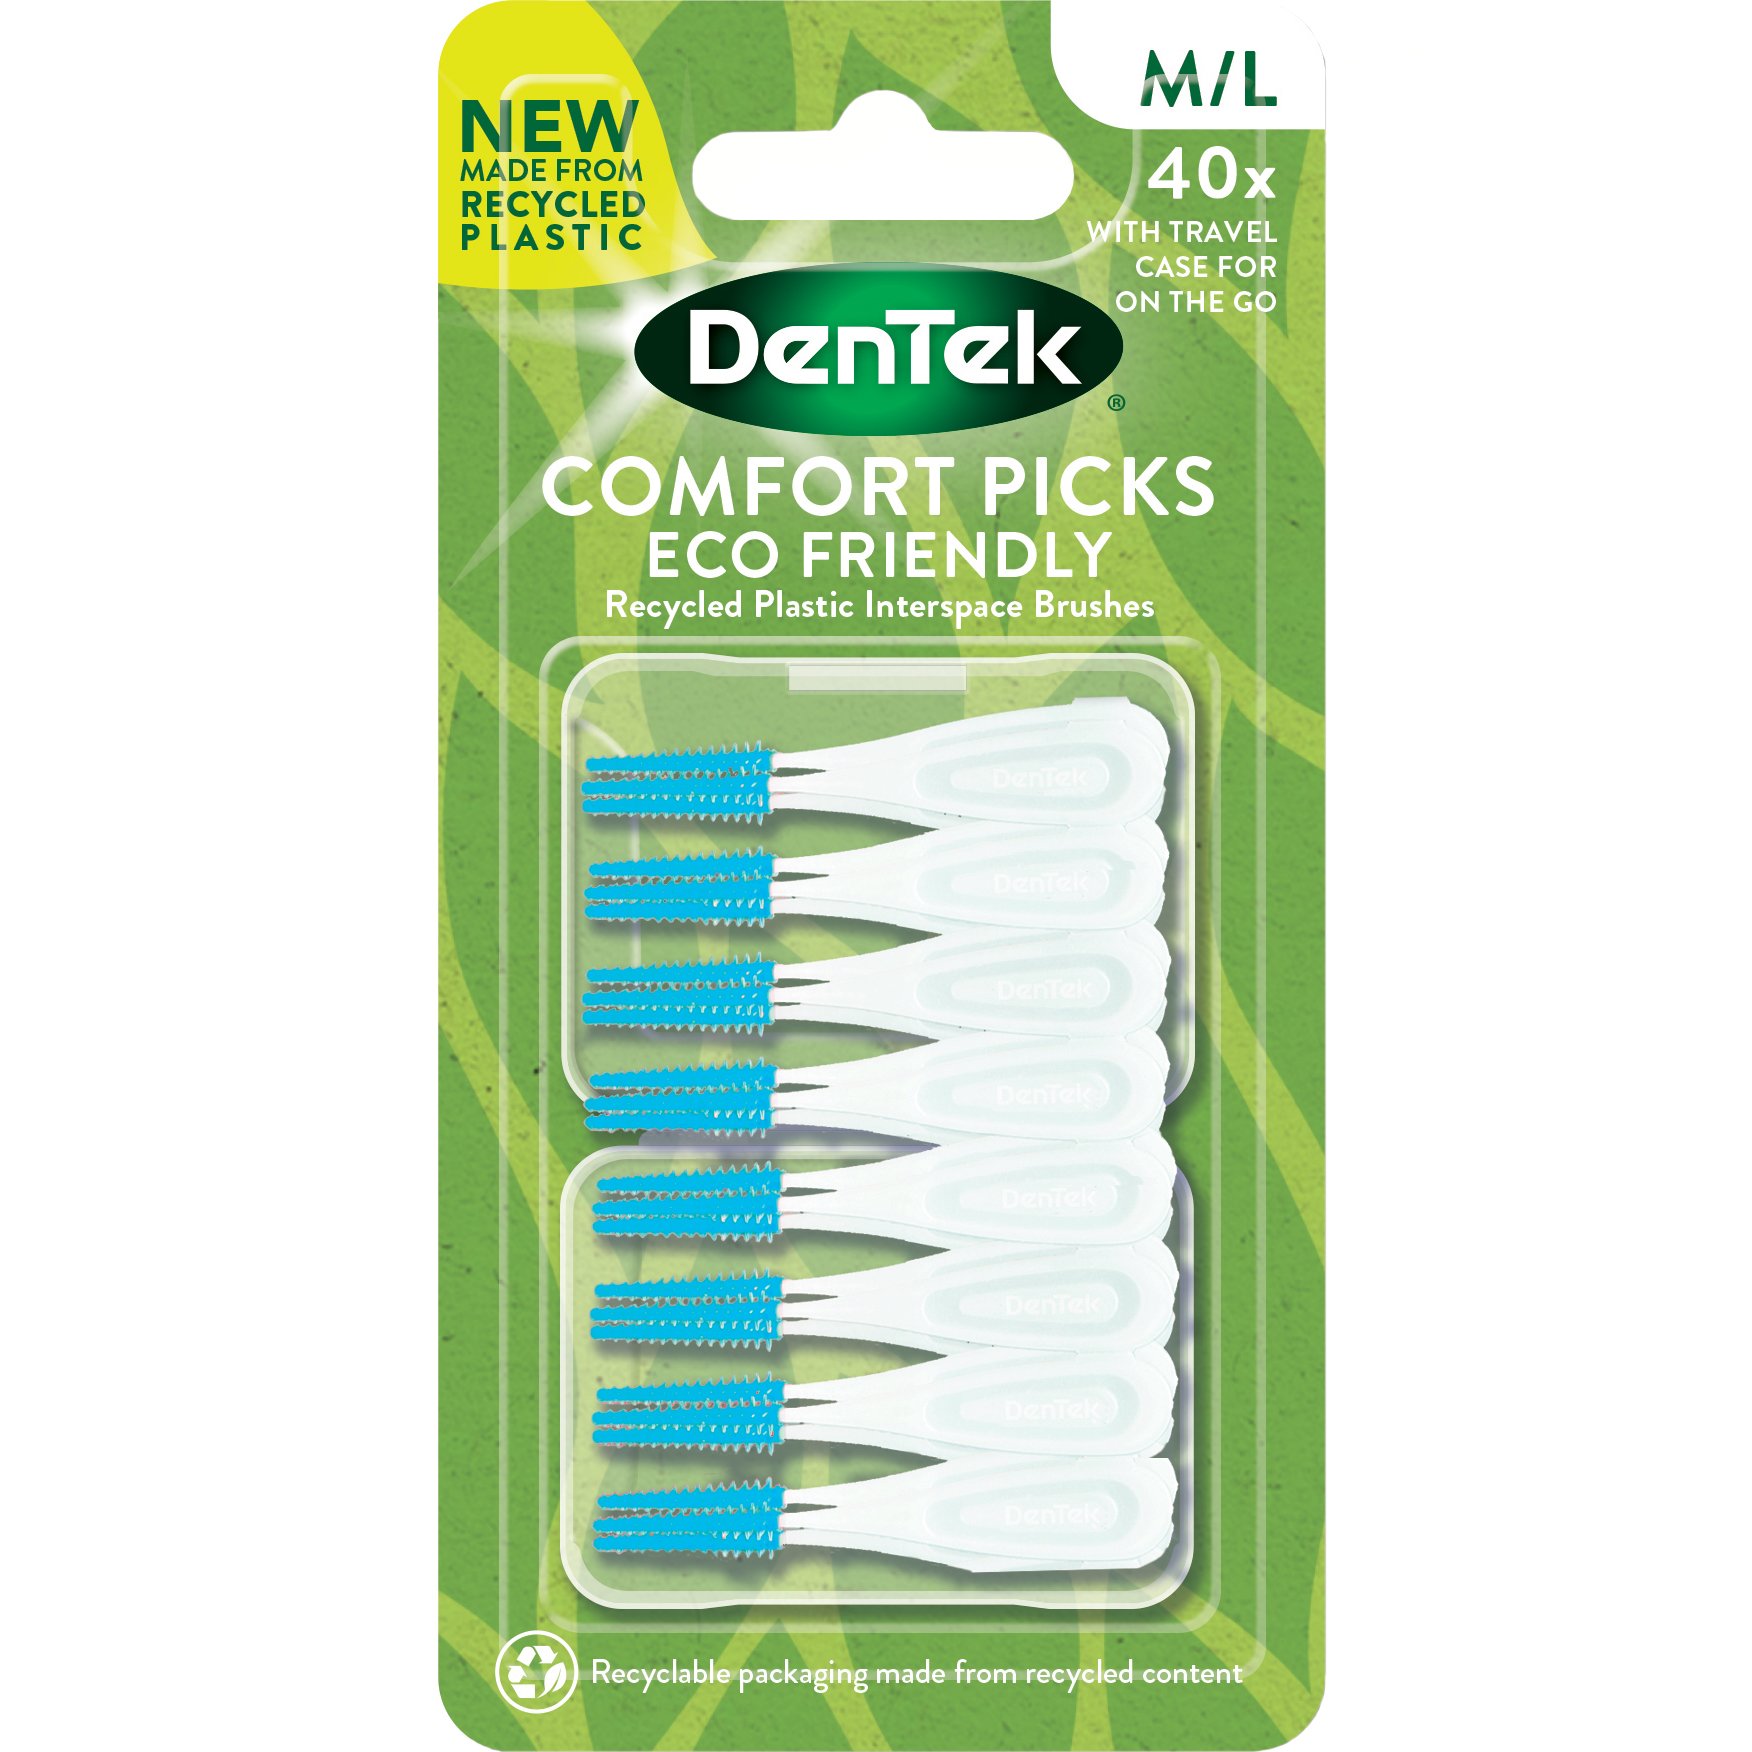 Dentek Comfort Picks Recycled Plastic Interspace Brushes Size M/L Μεσοδόντια Βουρτσάκια από Καουτσούκ 40 Τεμάχια